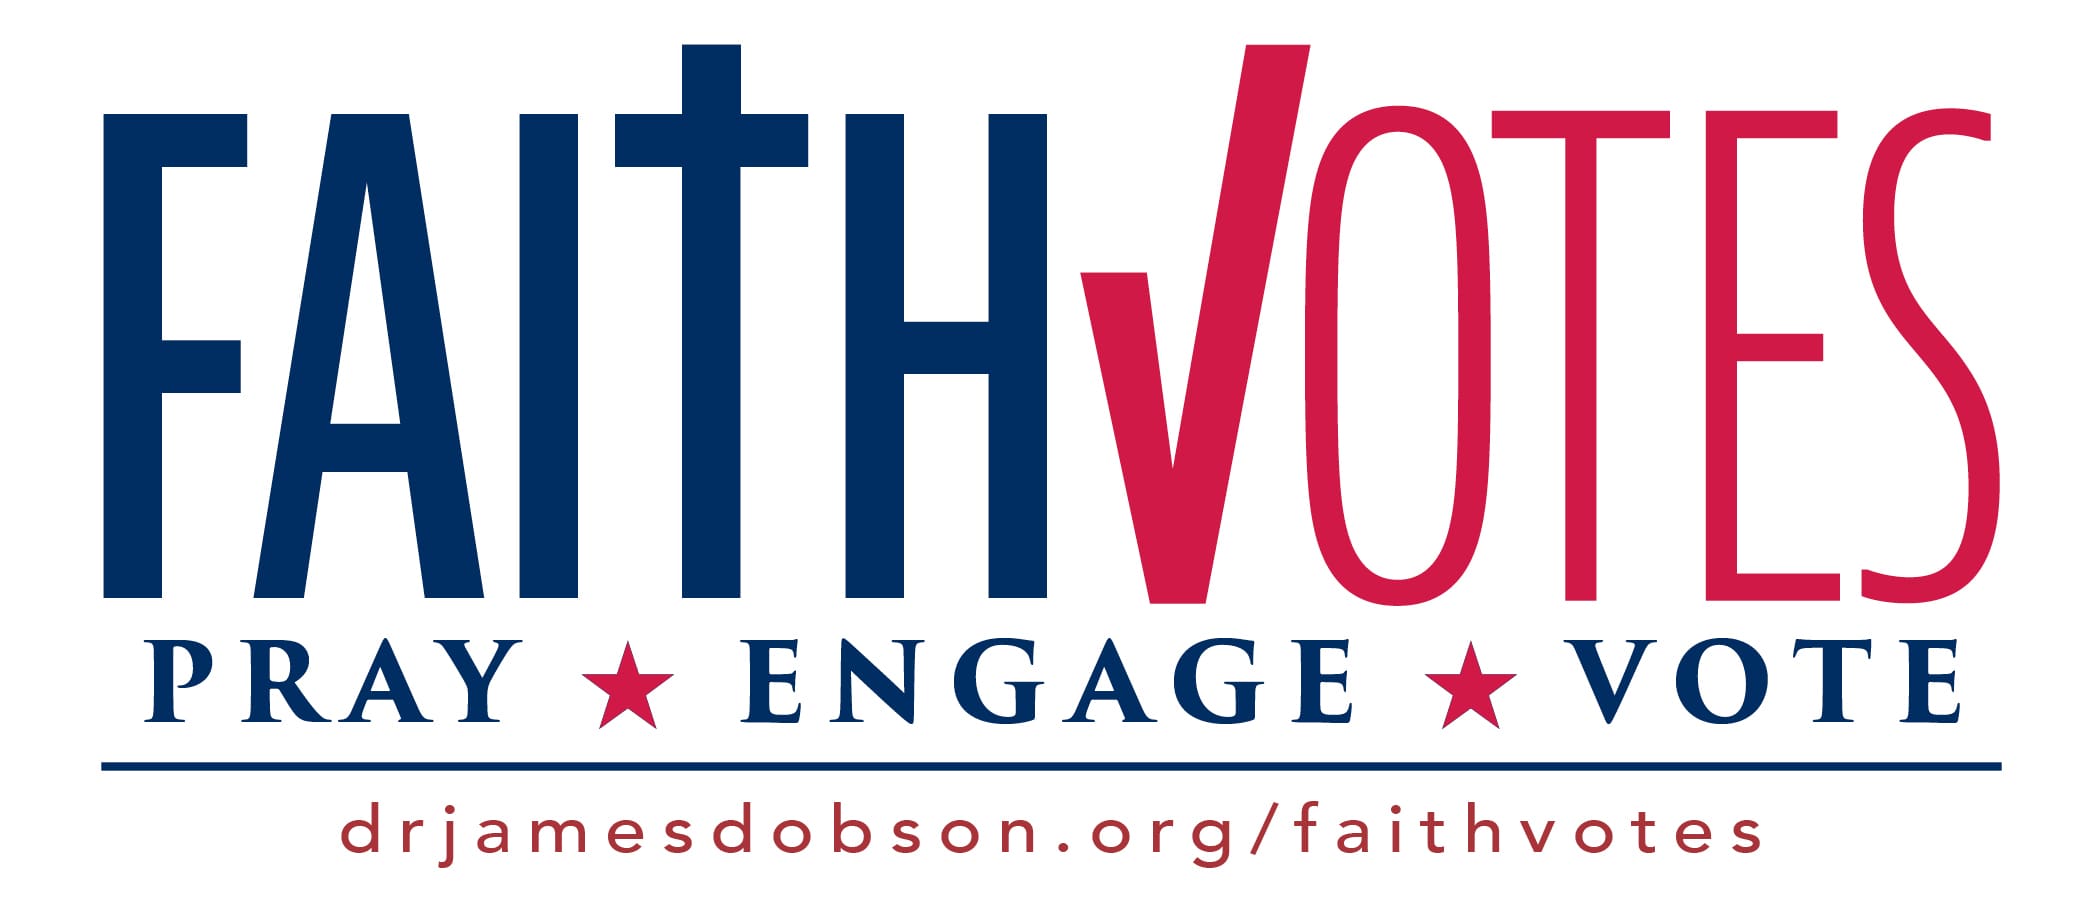 faithvotes-sticker